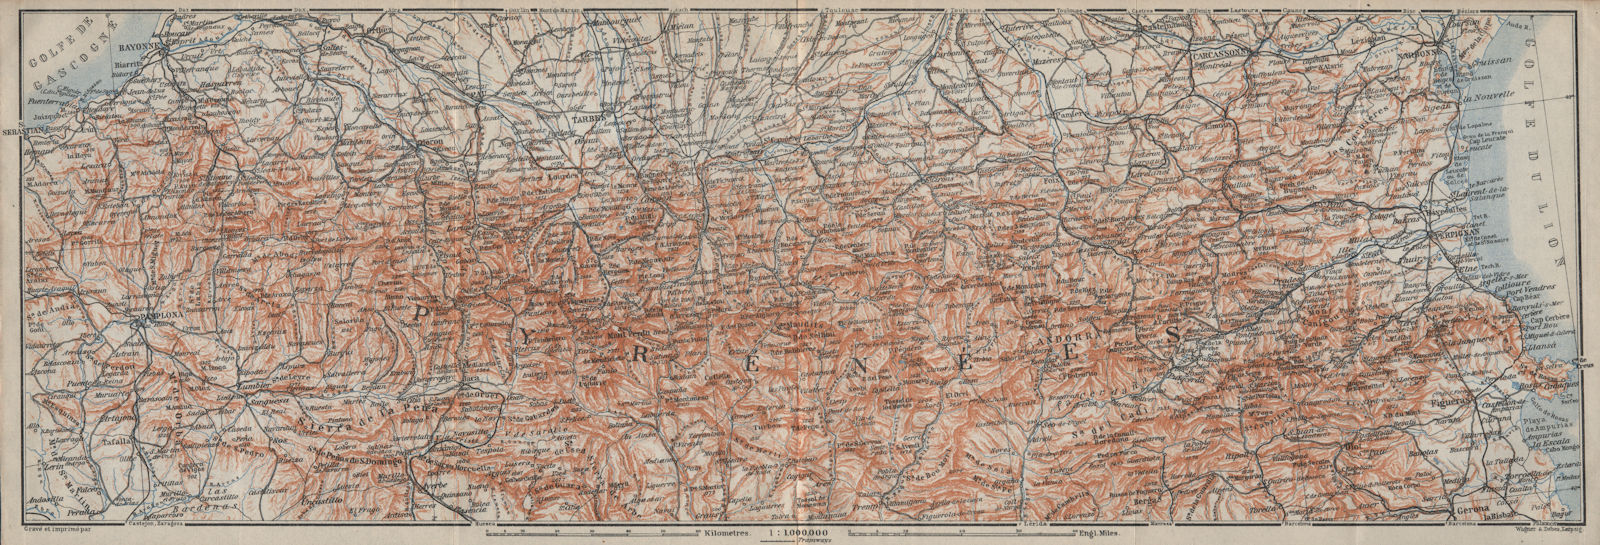 Associate Product THE PYRENEES. Bayonne Pamplona Tarbes Perpignan Narbonne. Pyrénées 1914 map